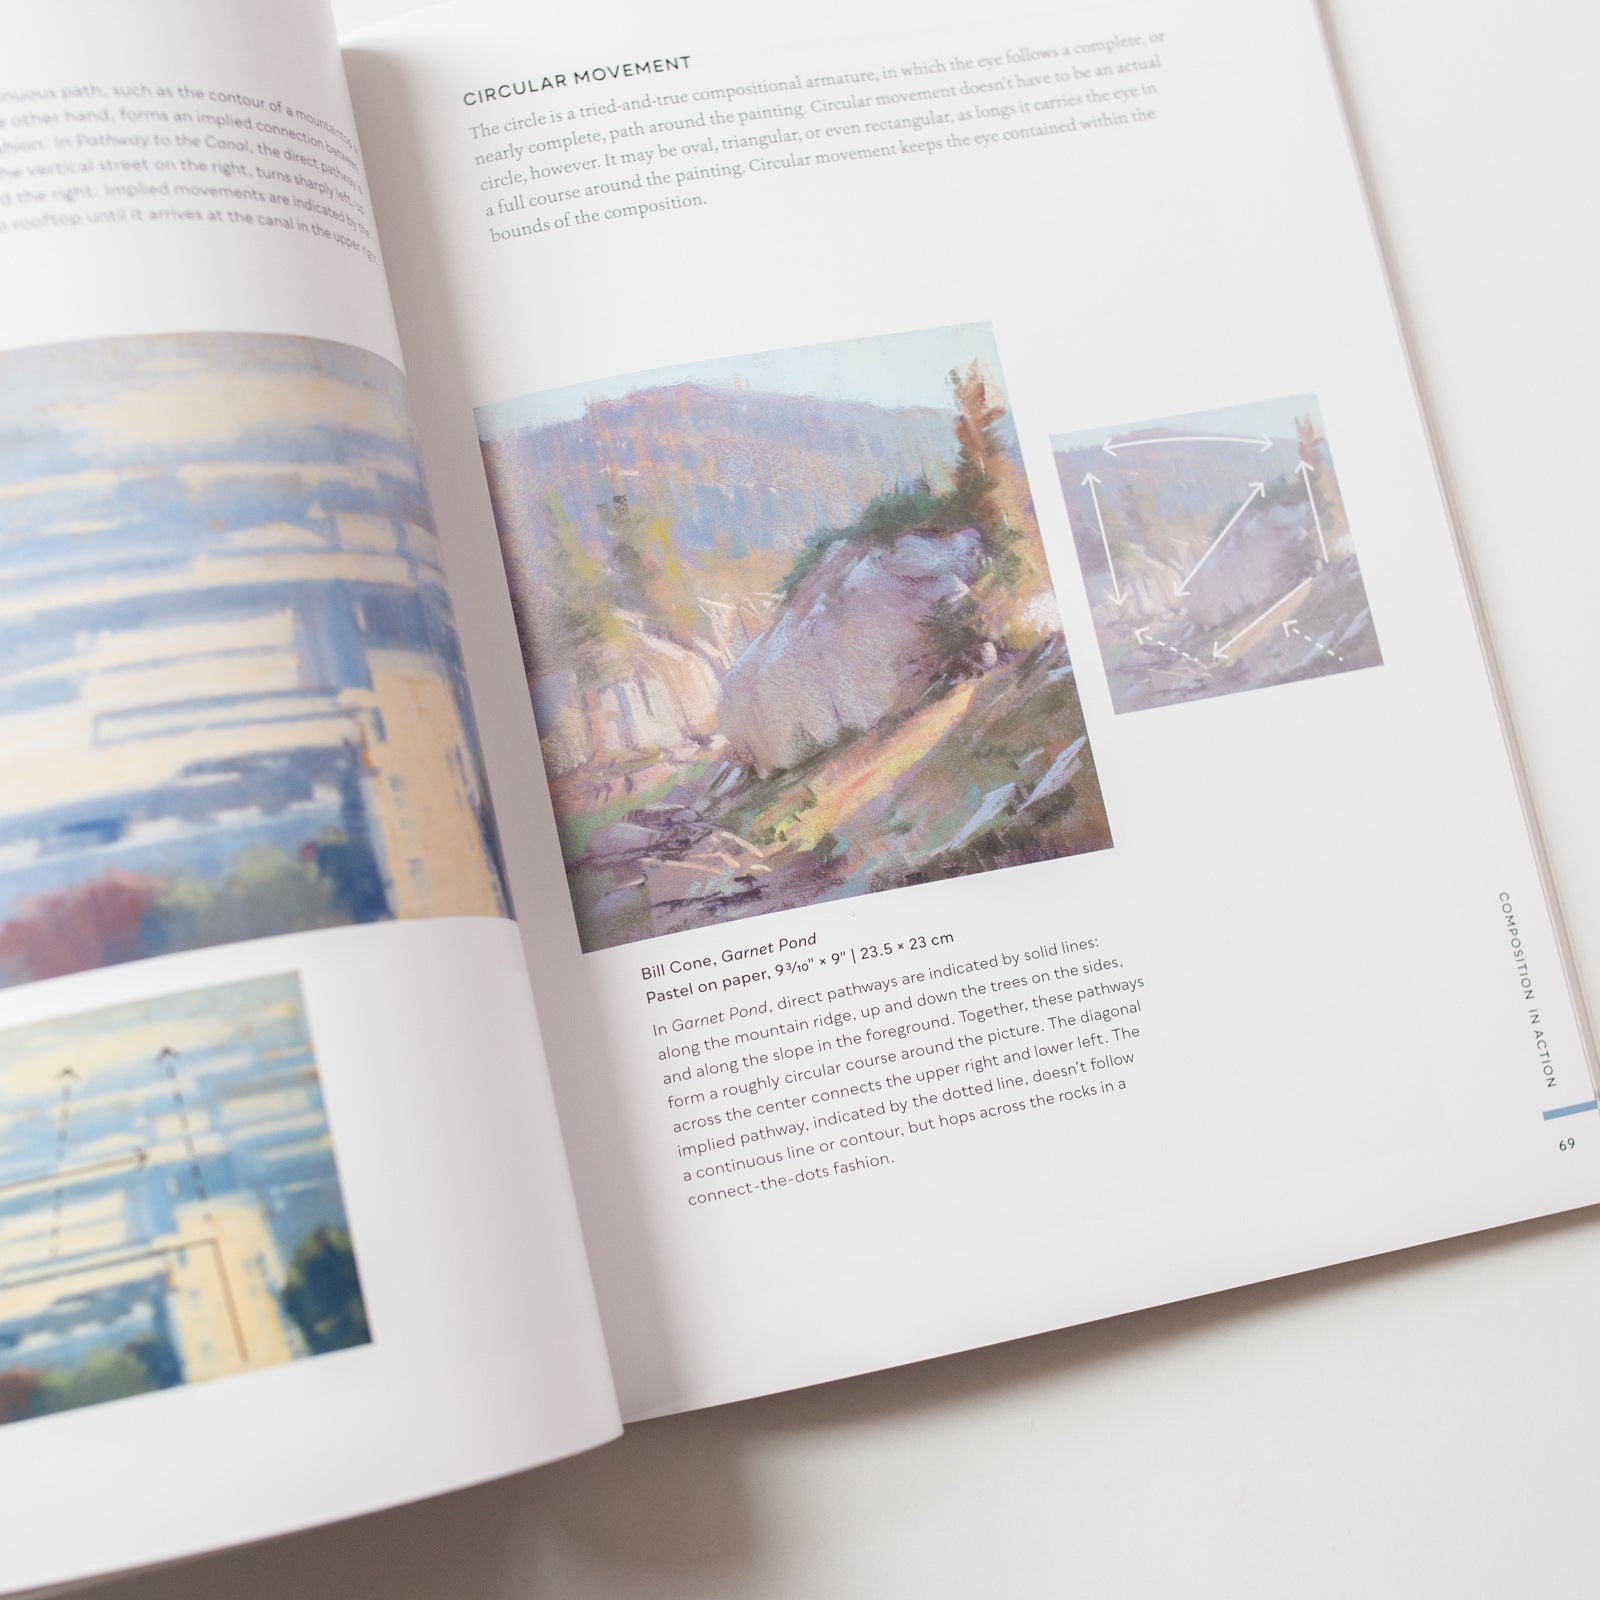 The landscape painter's workbook by Mitchell Albala